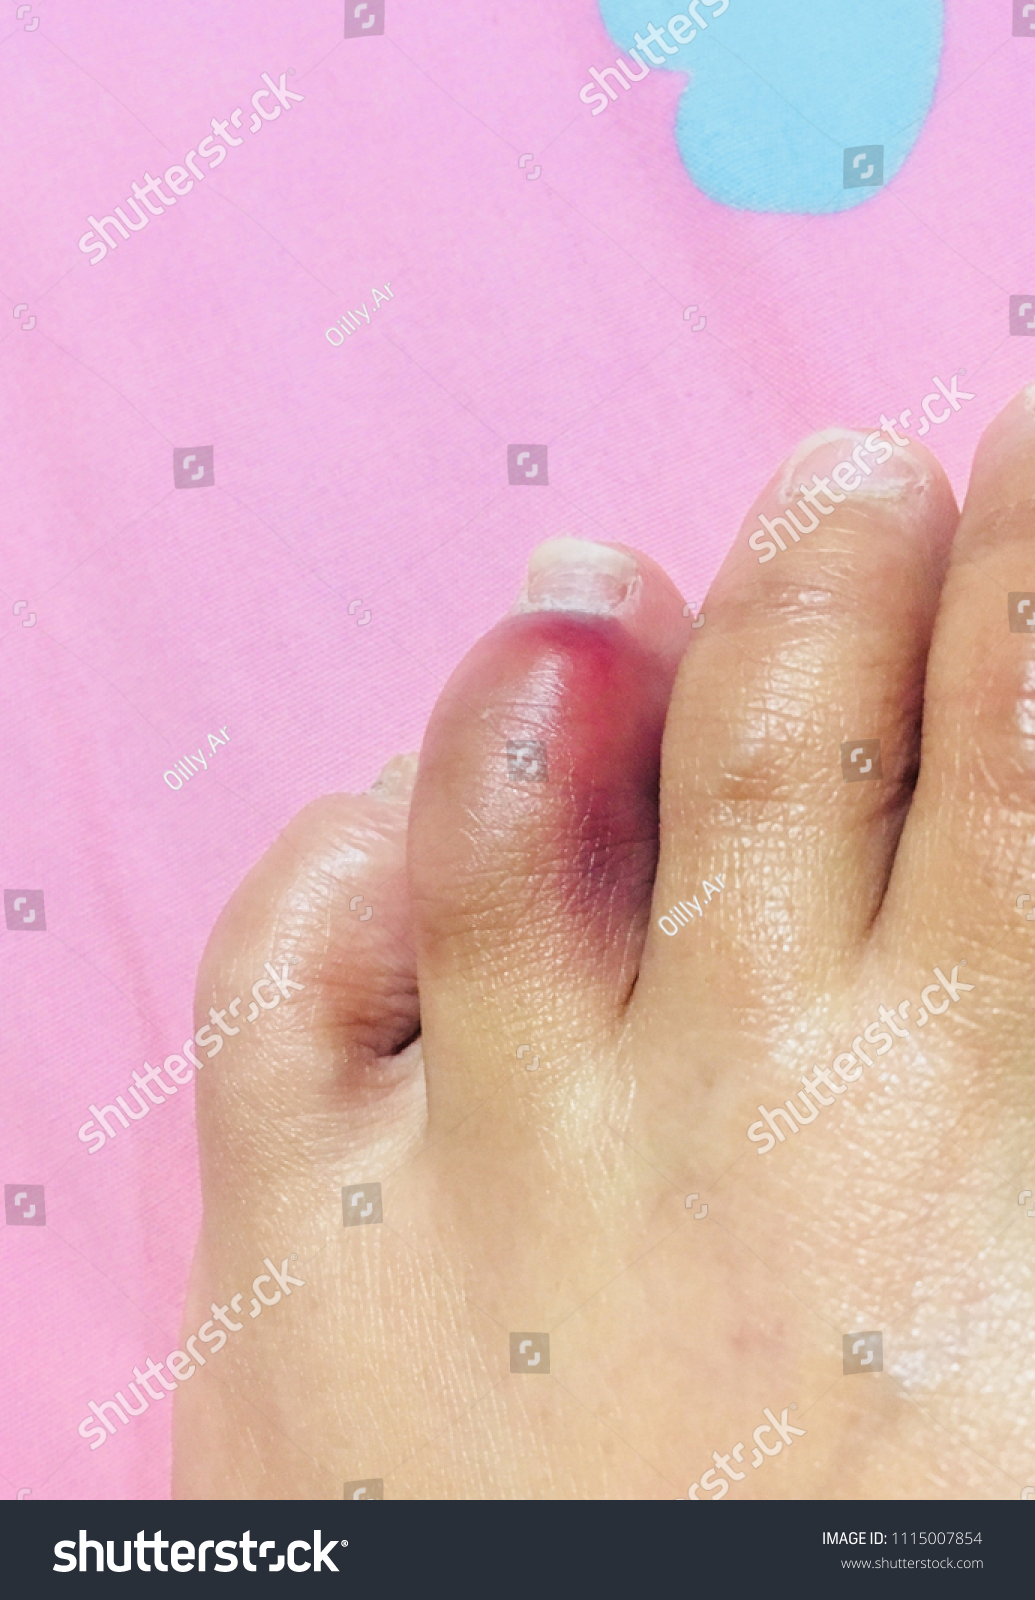 Bruises Bunions Broken Toes On Pink Stock Photo Edit Now 1115007854